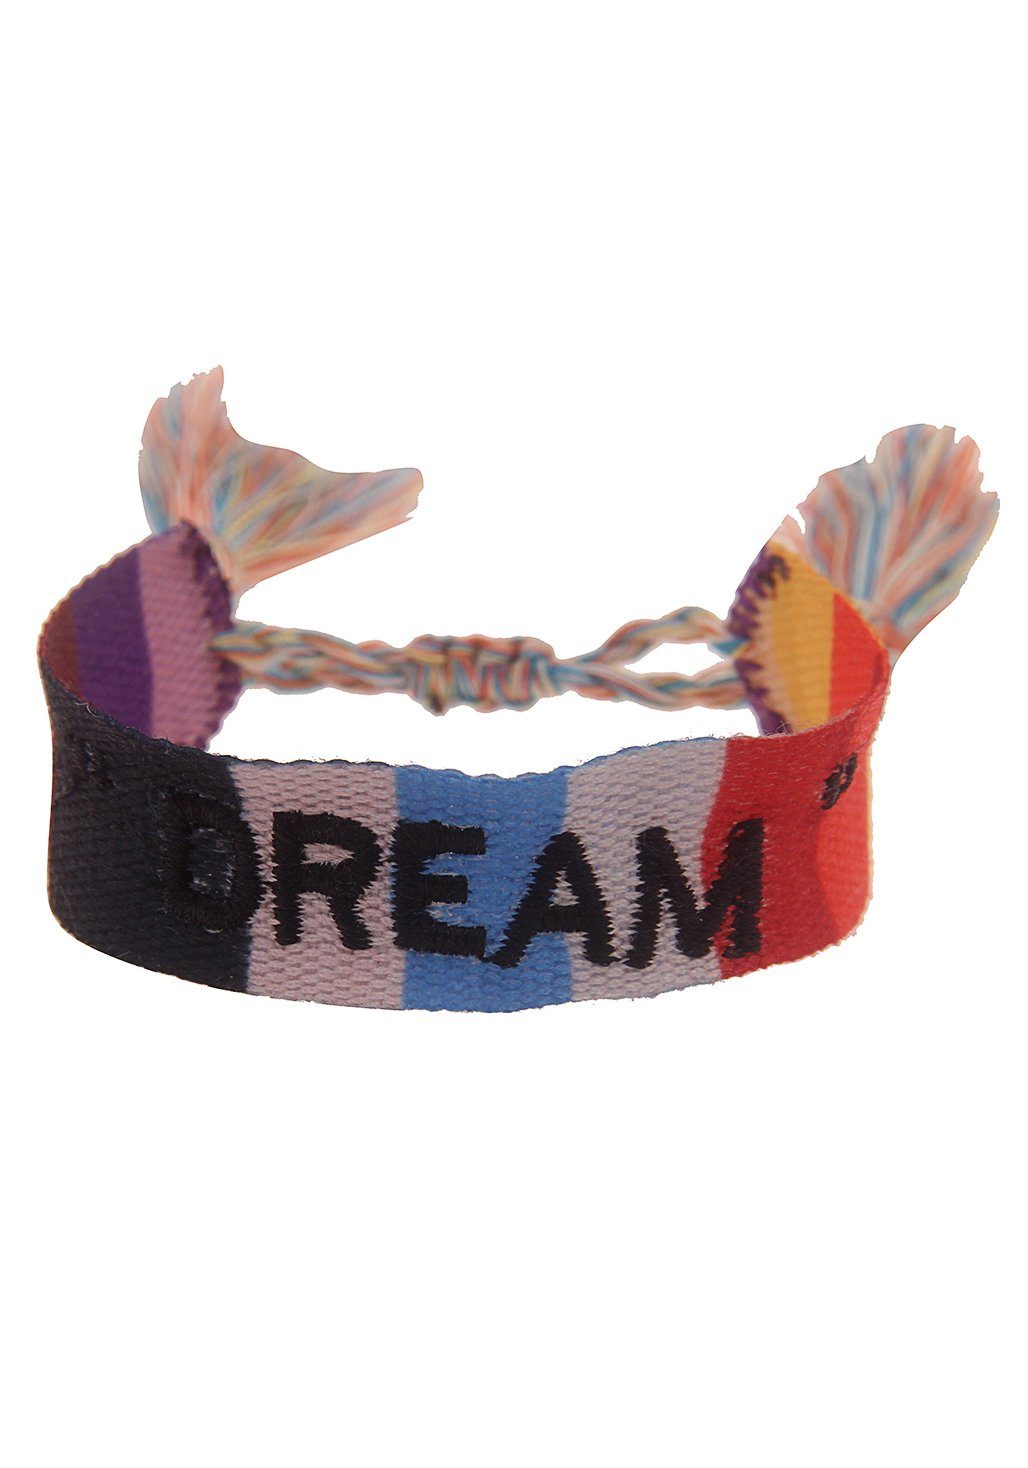 Dream, Festival Armband, leslii 260120407 Armband